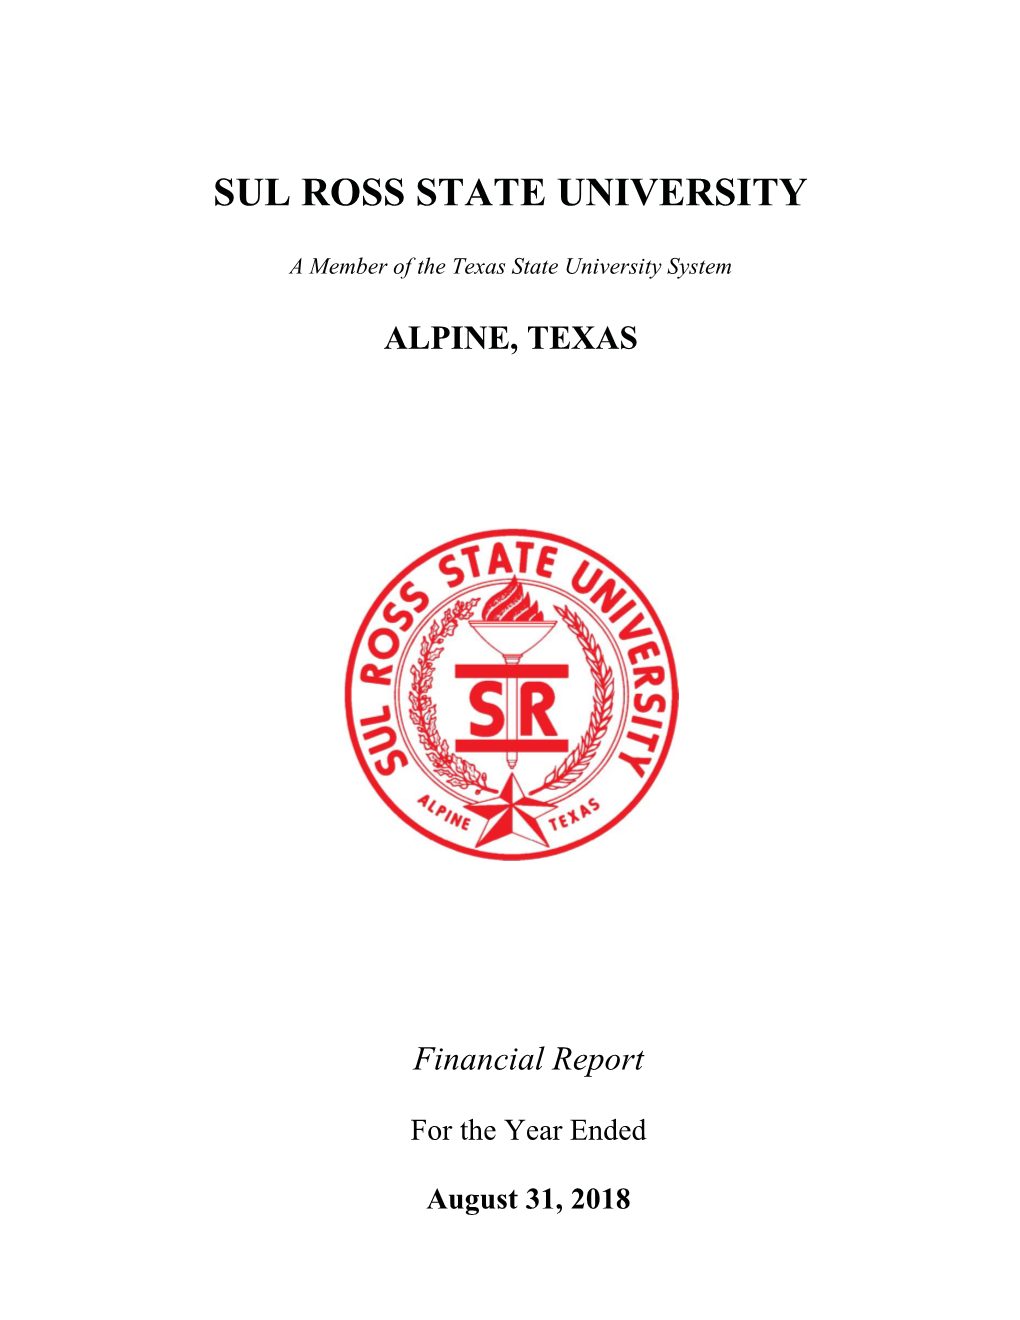 ALPINE, TEXAS Financial Report